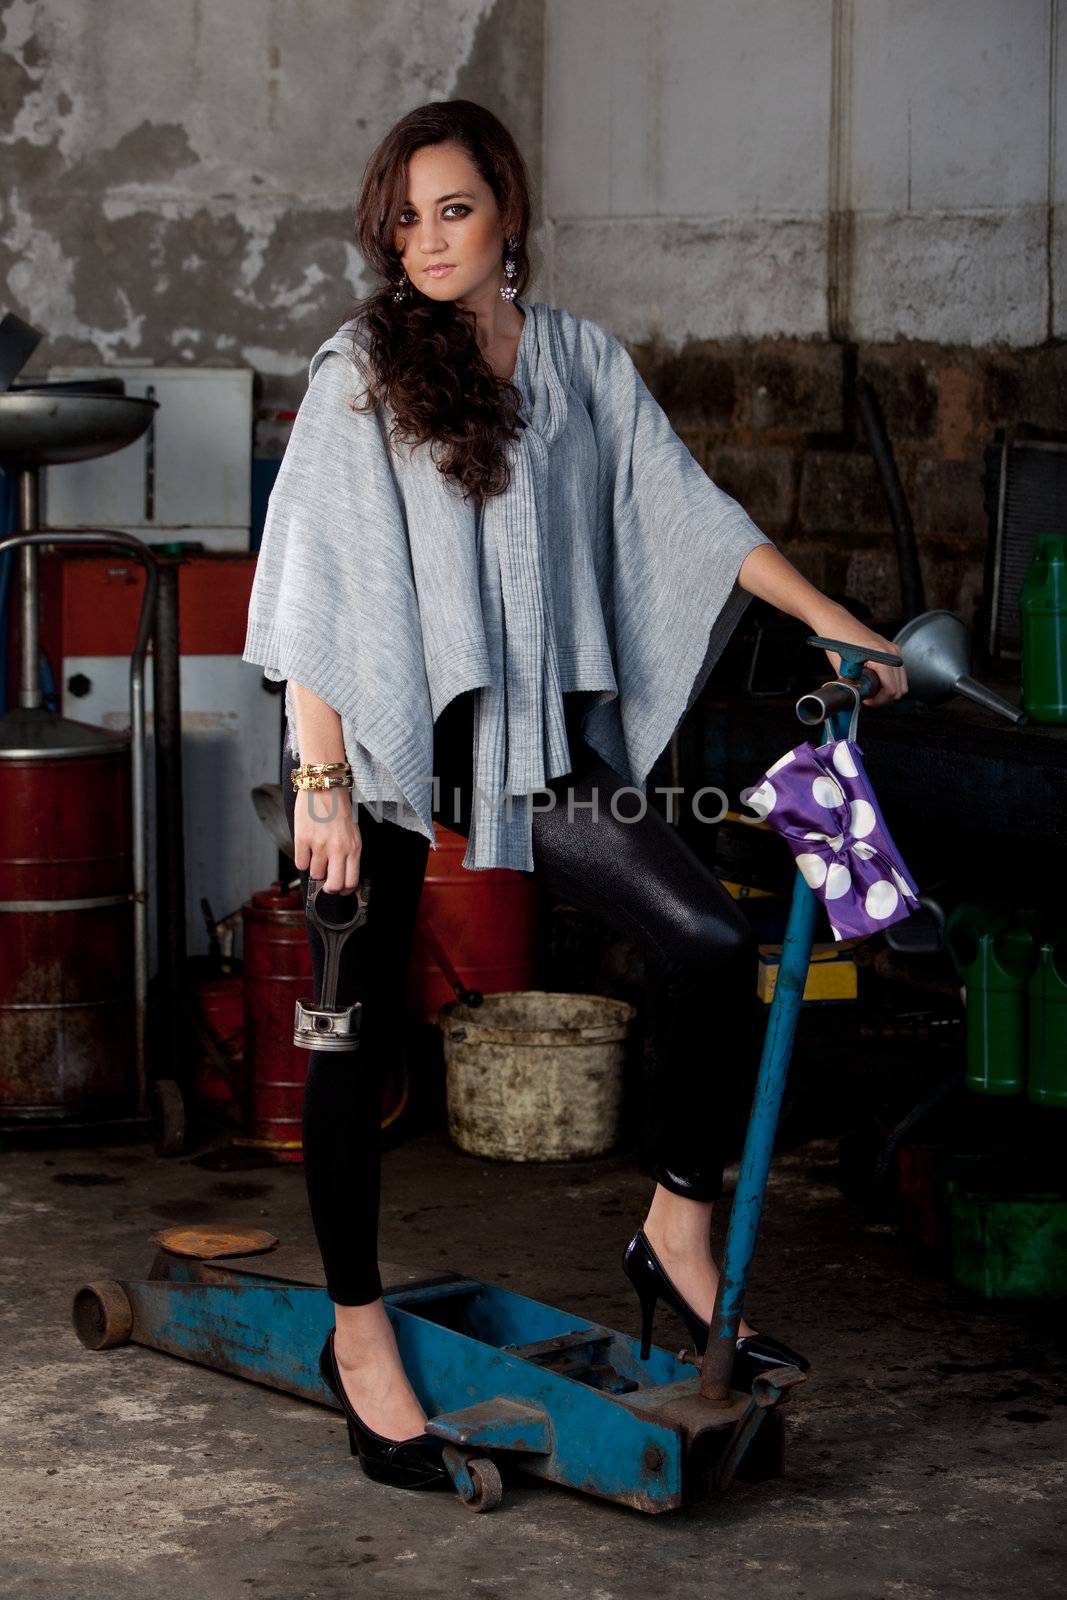 A young brazilian female model shot in a dirty auto repair shop.